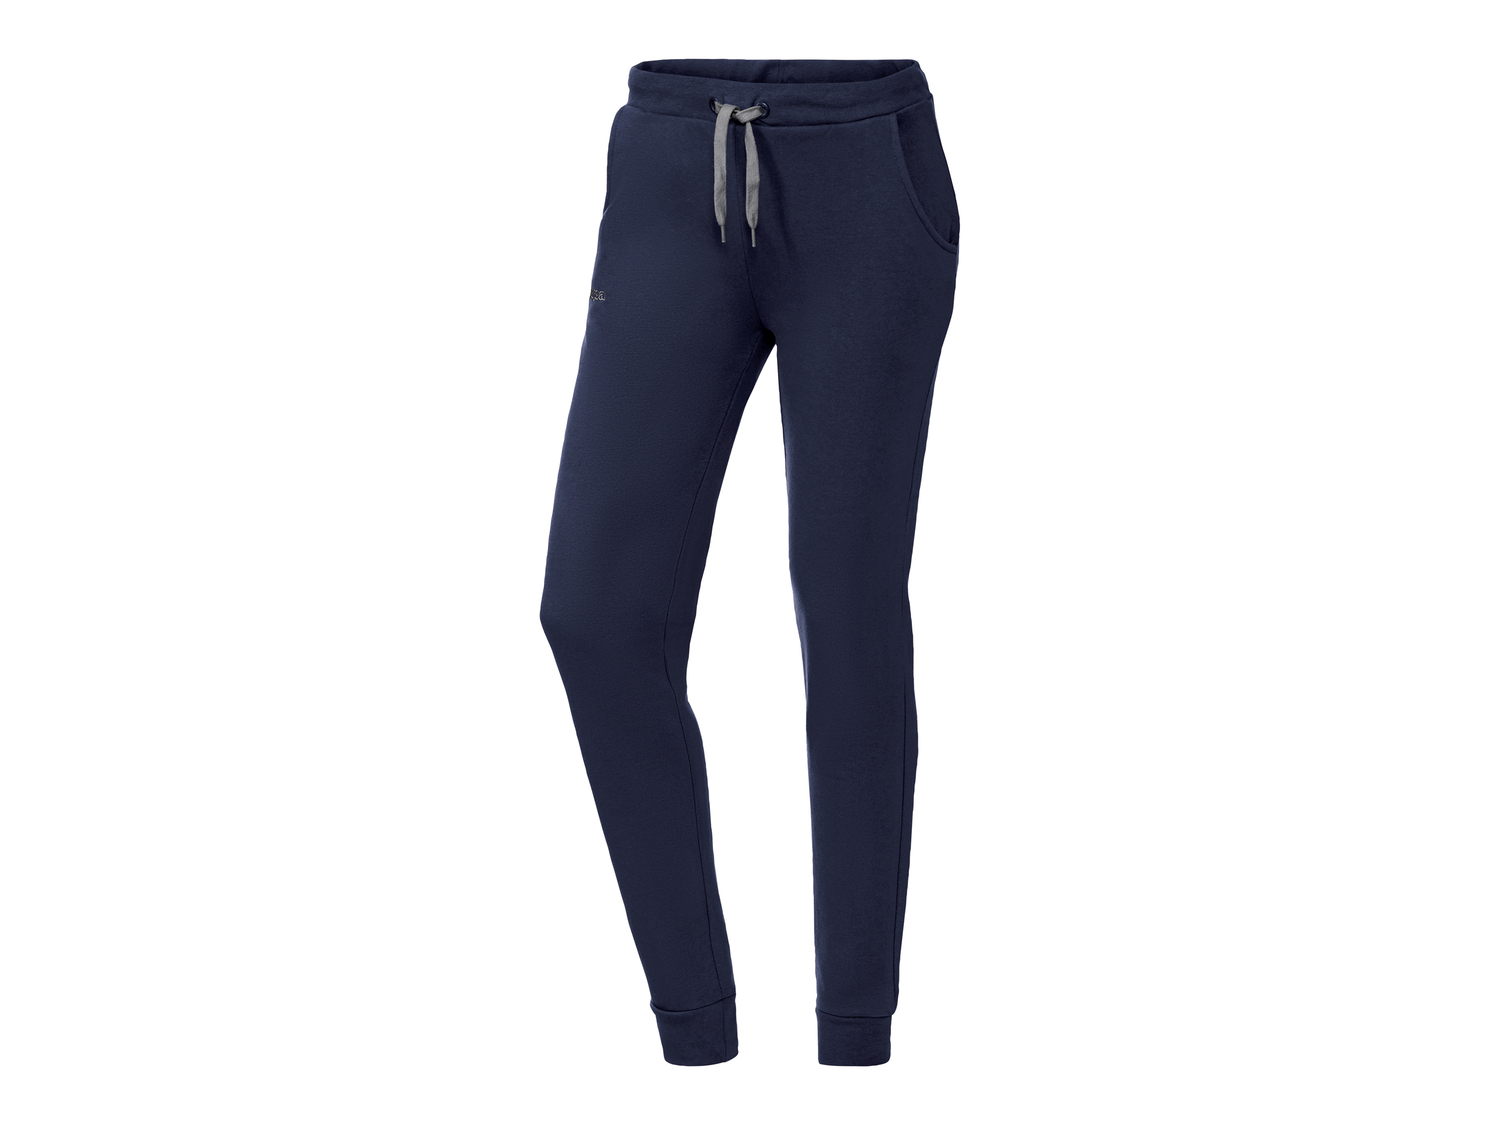 Pantaloni sportivi da donna Kappa, prezzo 22.99 &#8364; 
Misure: S-XL
Taglie ...